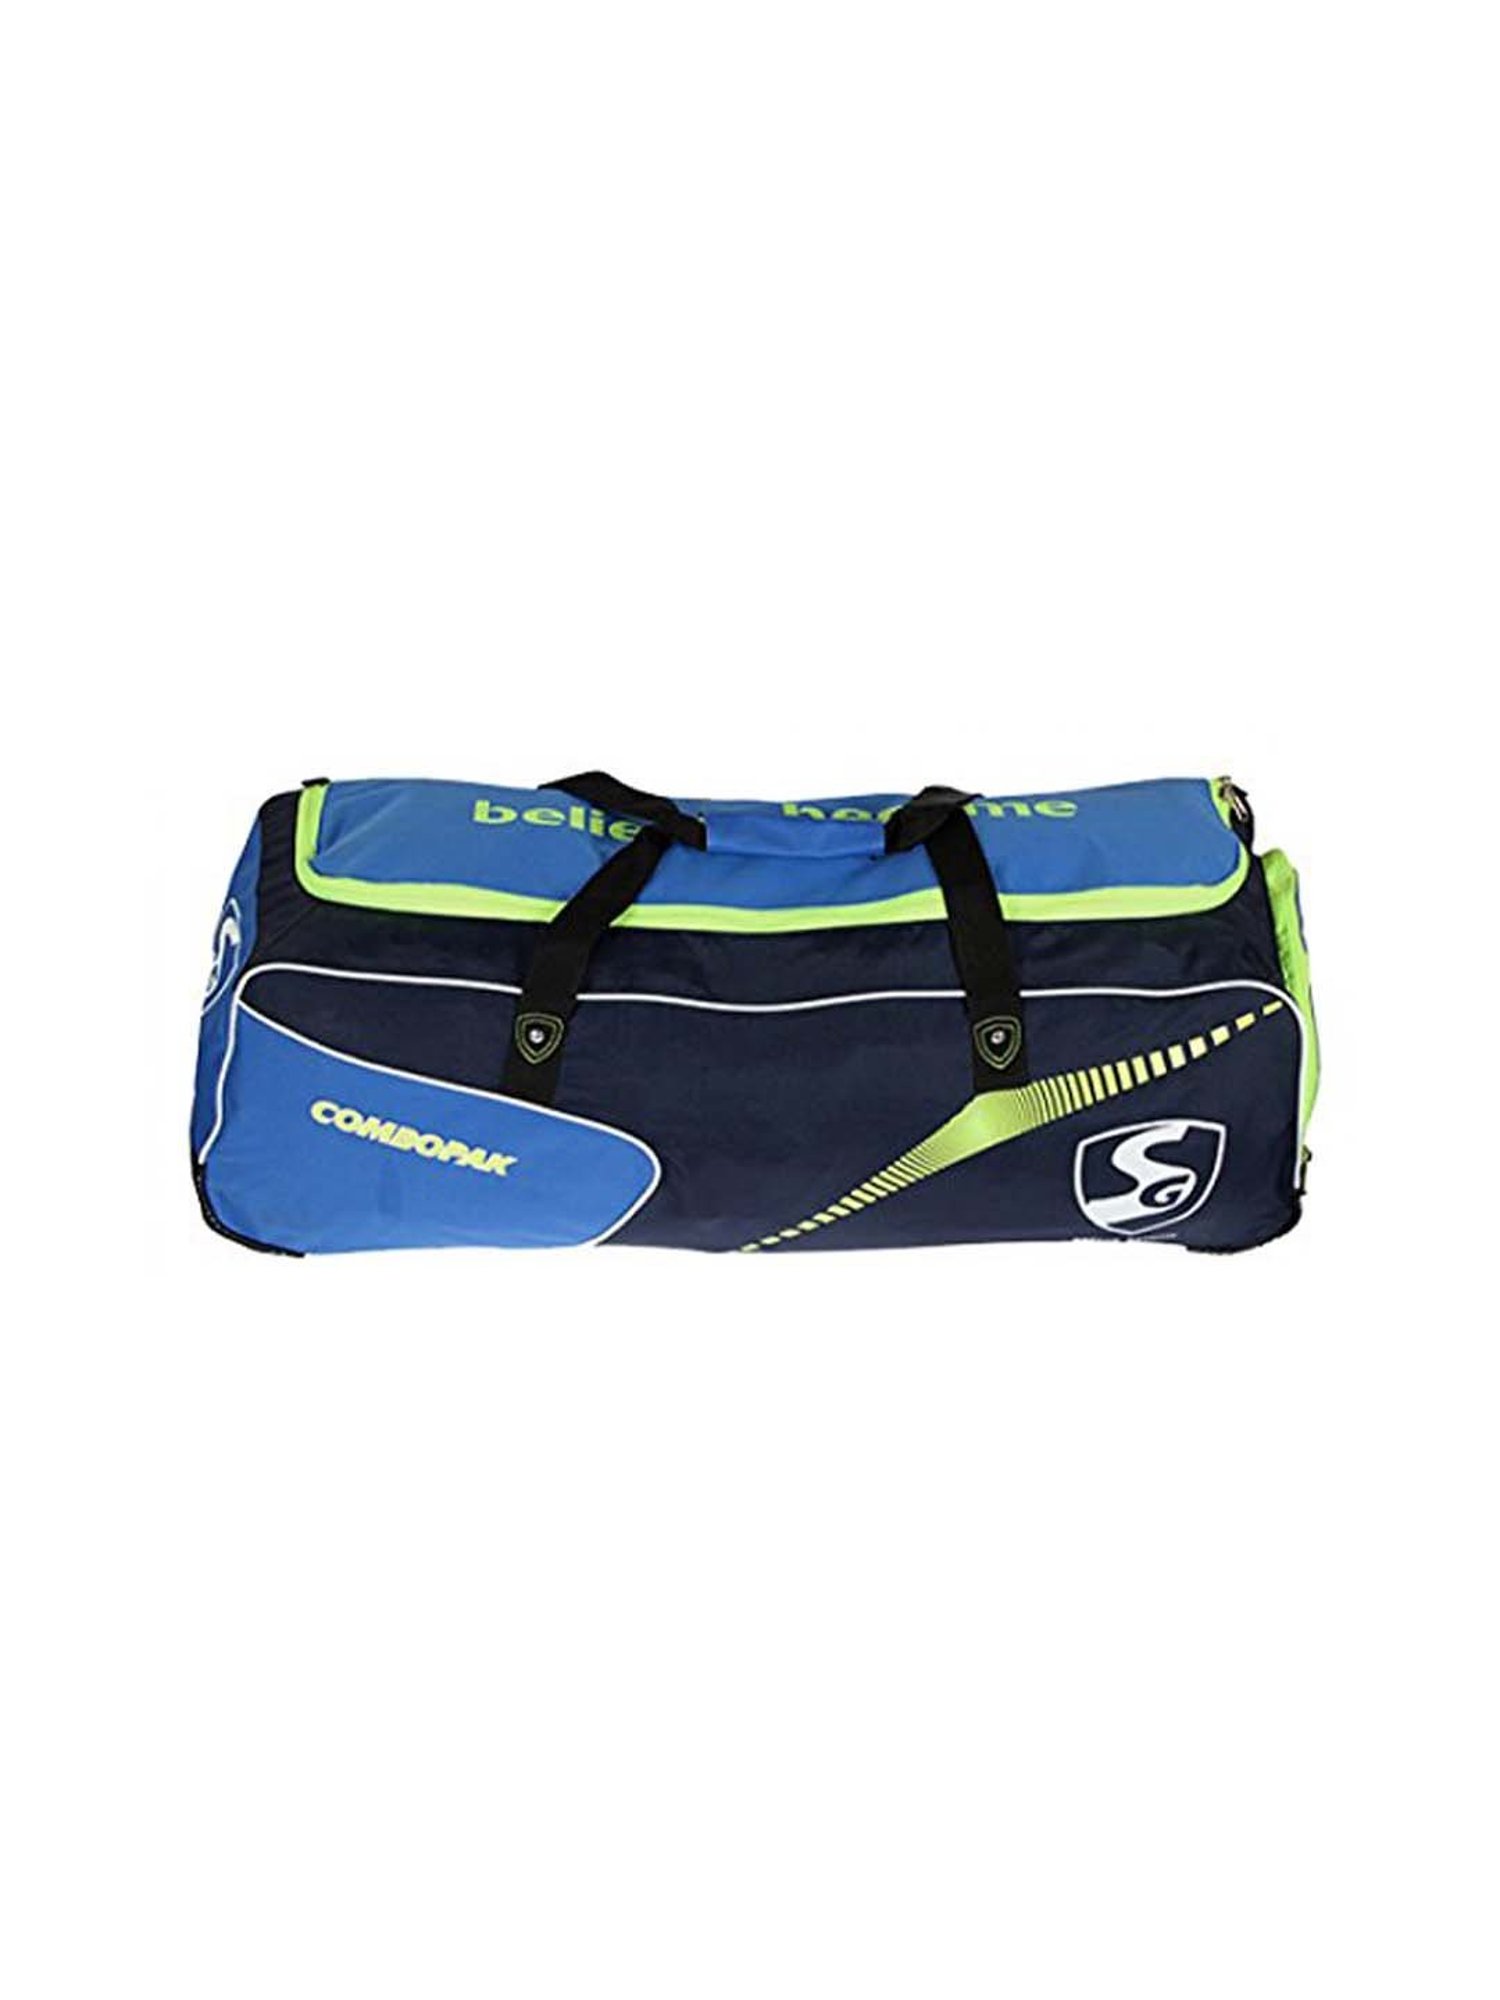 Thrax GTX Series Badminton Kit Bag (Red and Blue)